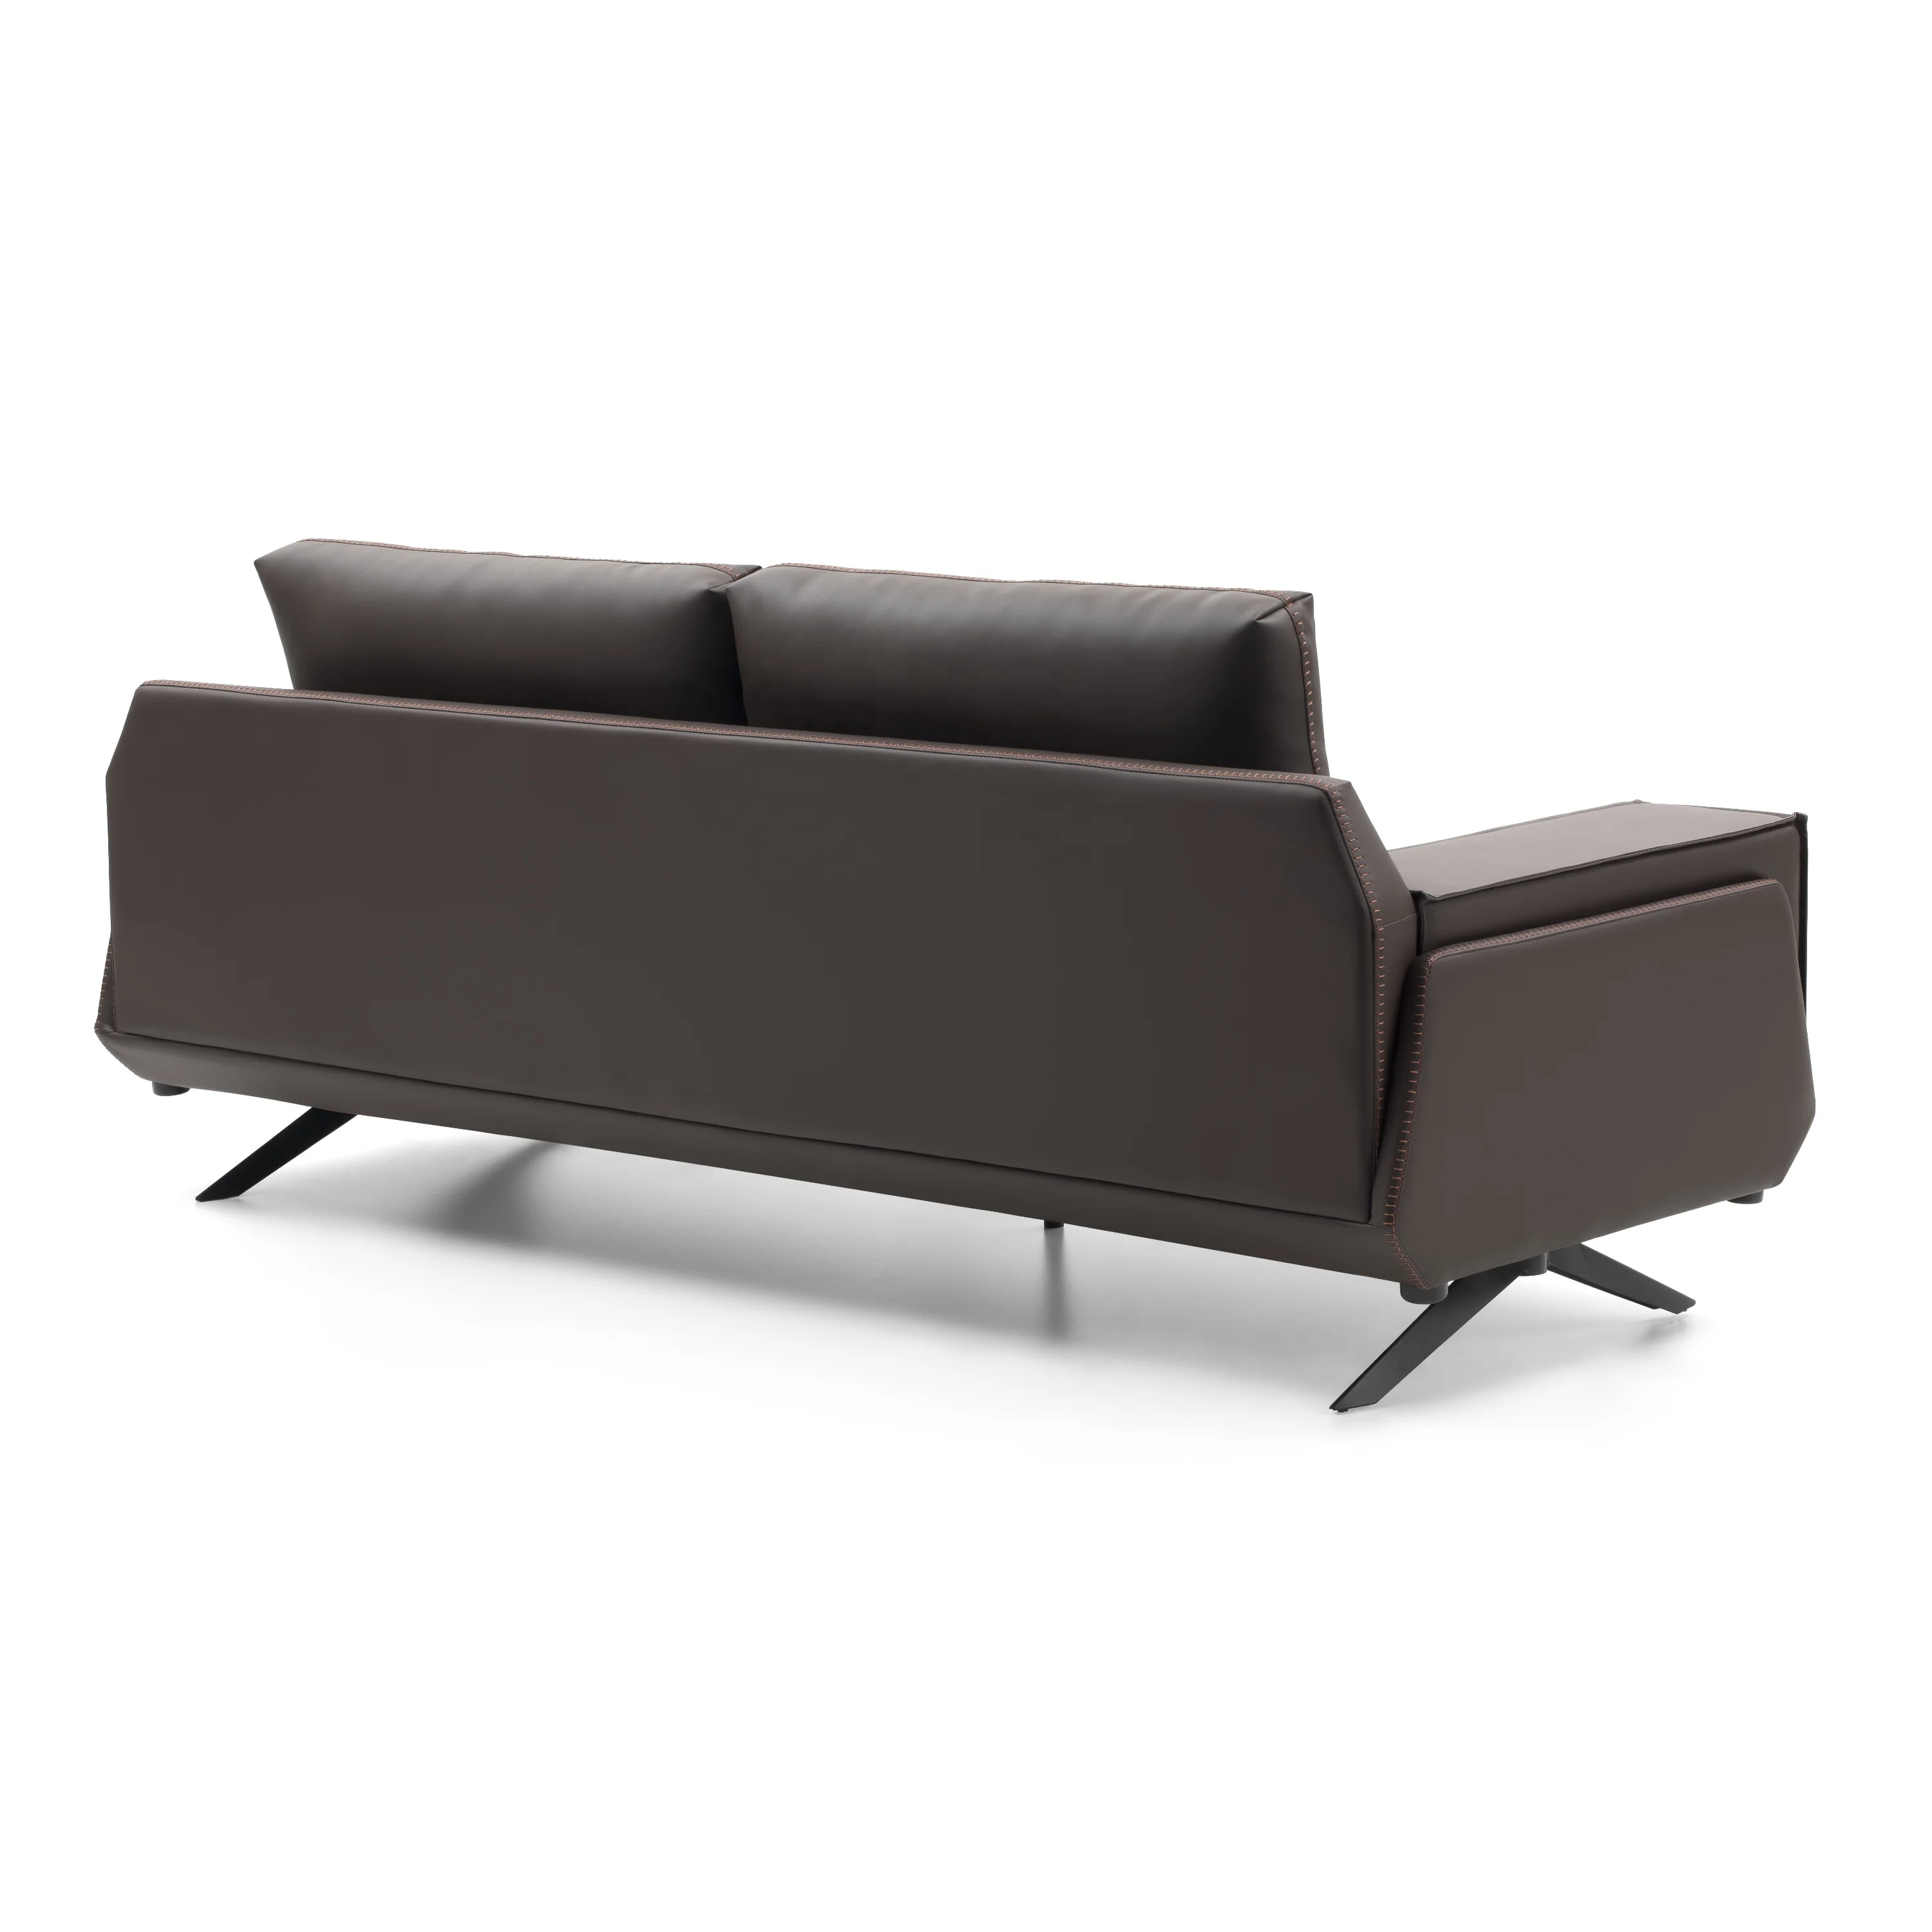 Strong Support Brown modular steel leg brown sofa sofa office modern room furniture